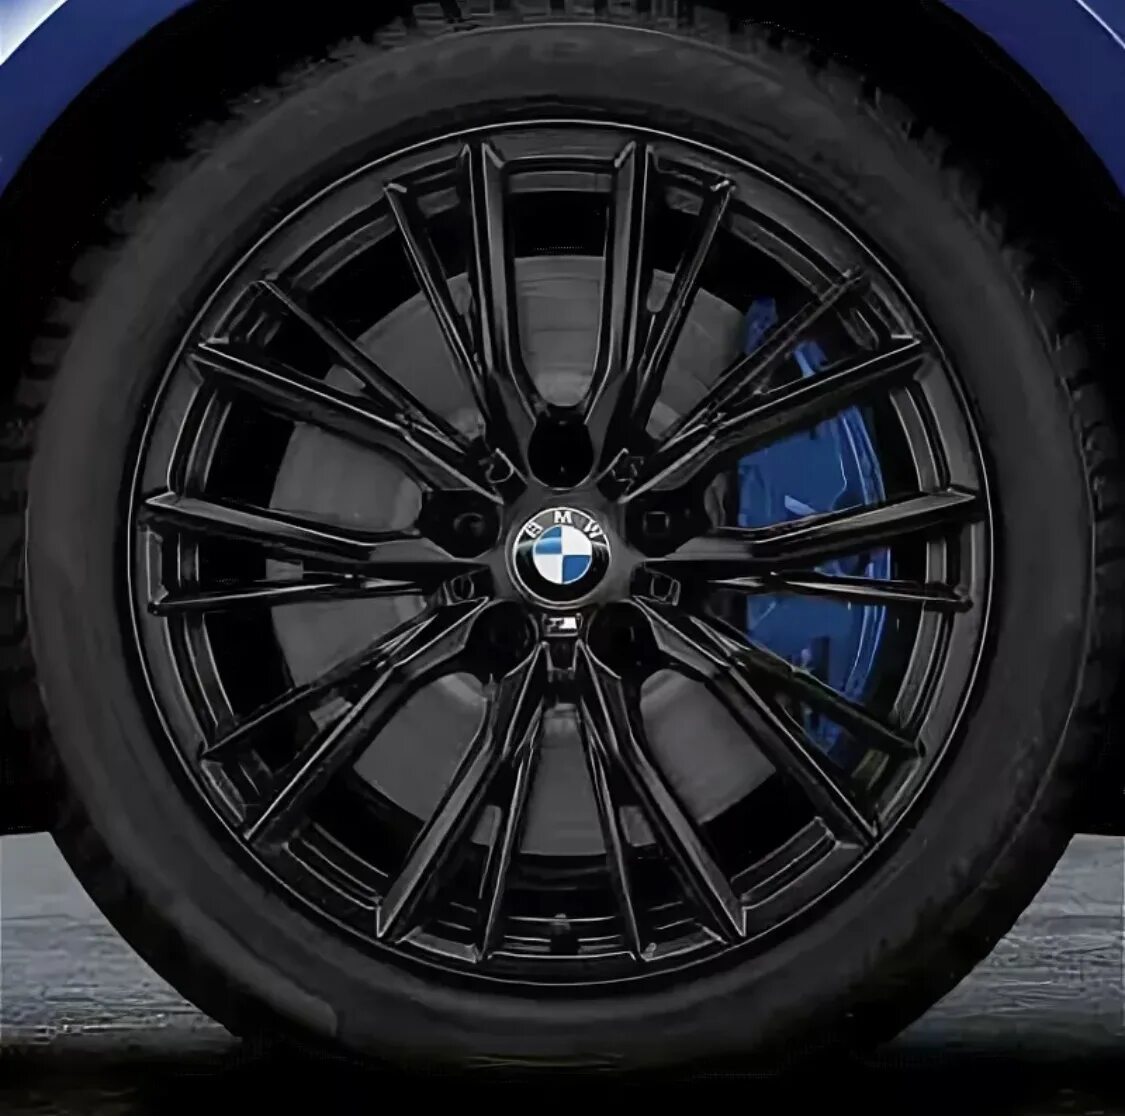 Колесо м s. Комплект колес Double spoke 796m Performance. Колеса BMW g20 r18. 18" Double spoke 796m Performance. BMW Double spoke 796m.